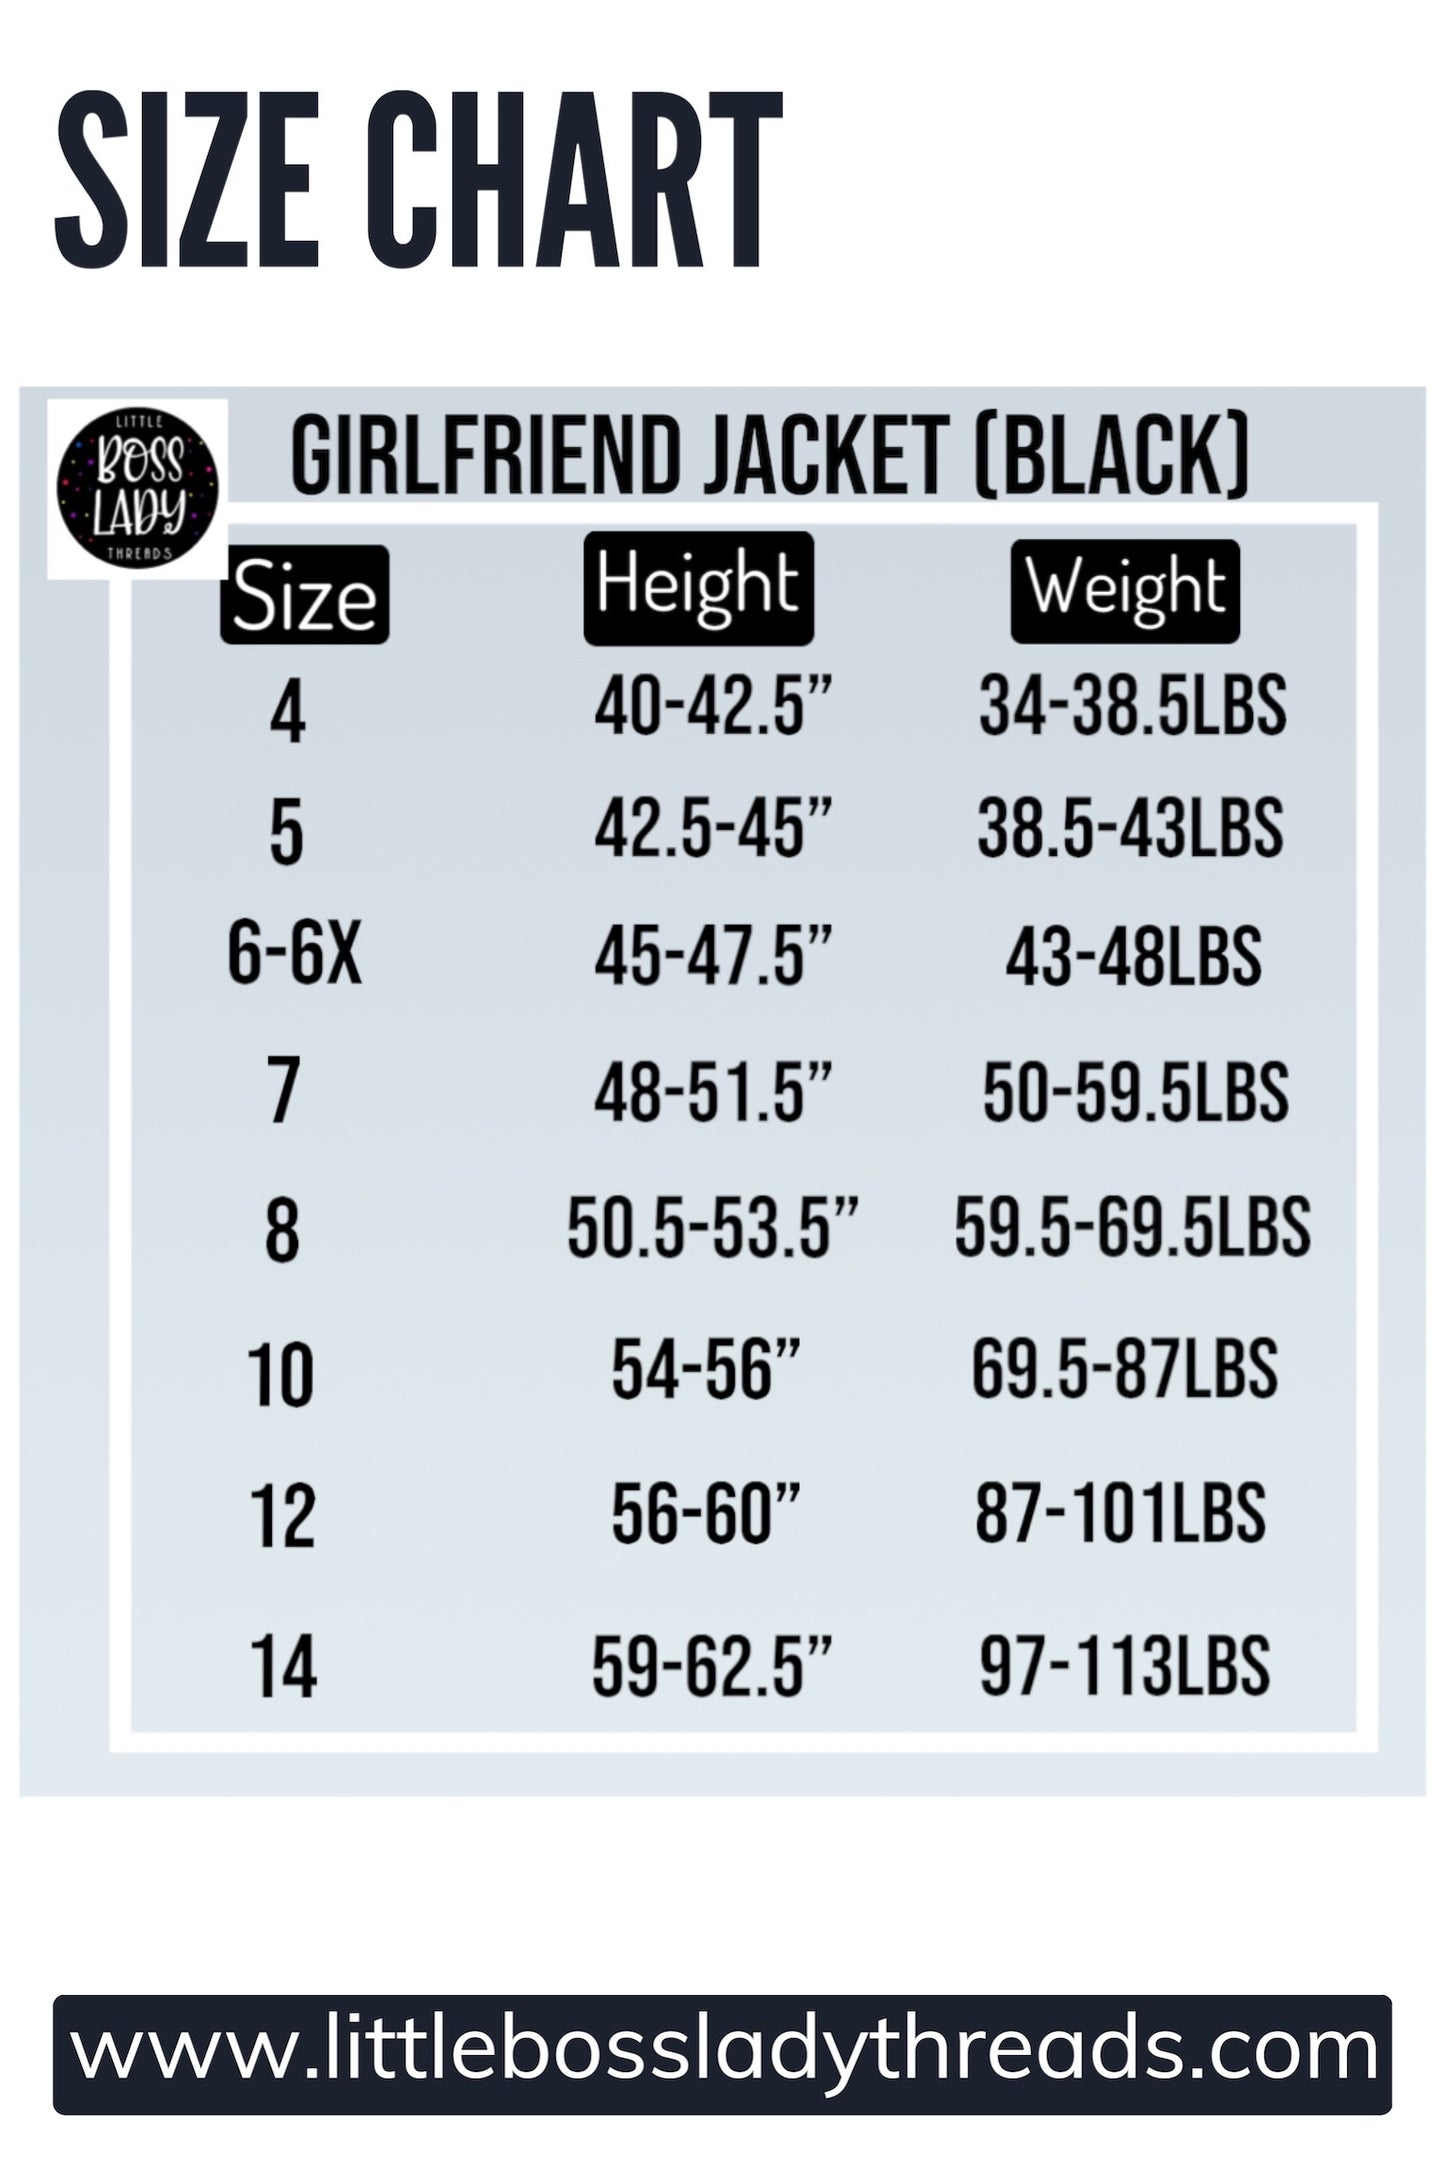 Girlfriend Jacket (BLACK)